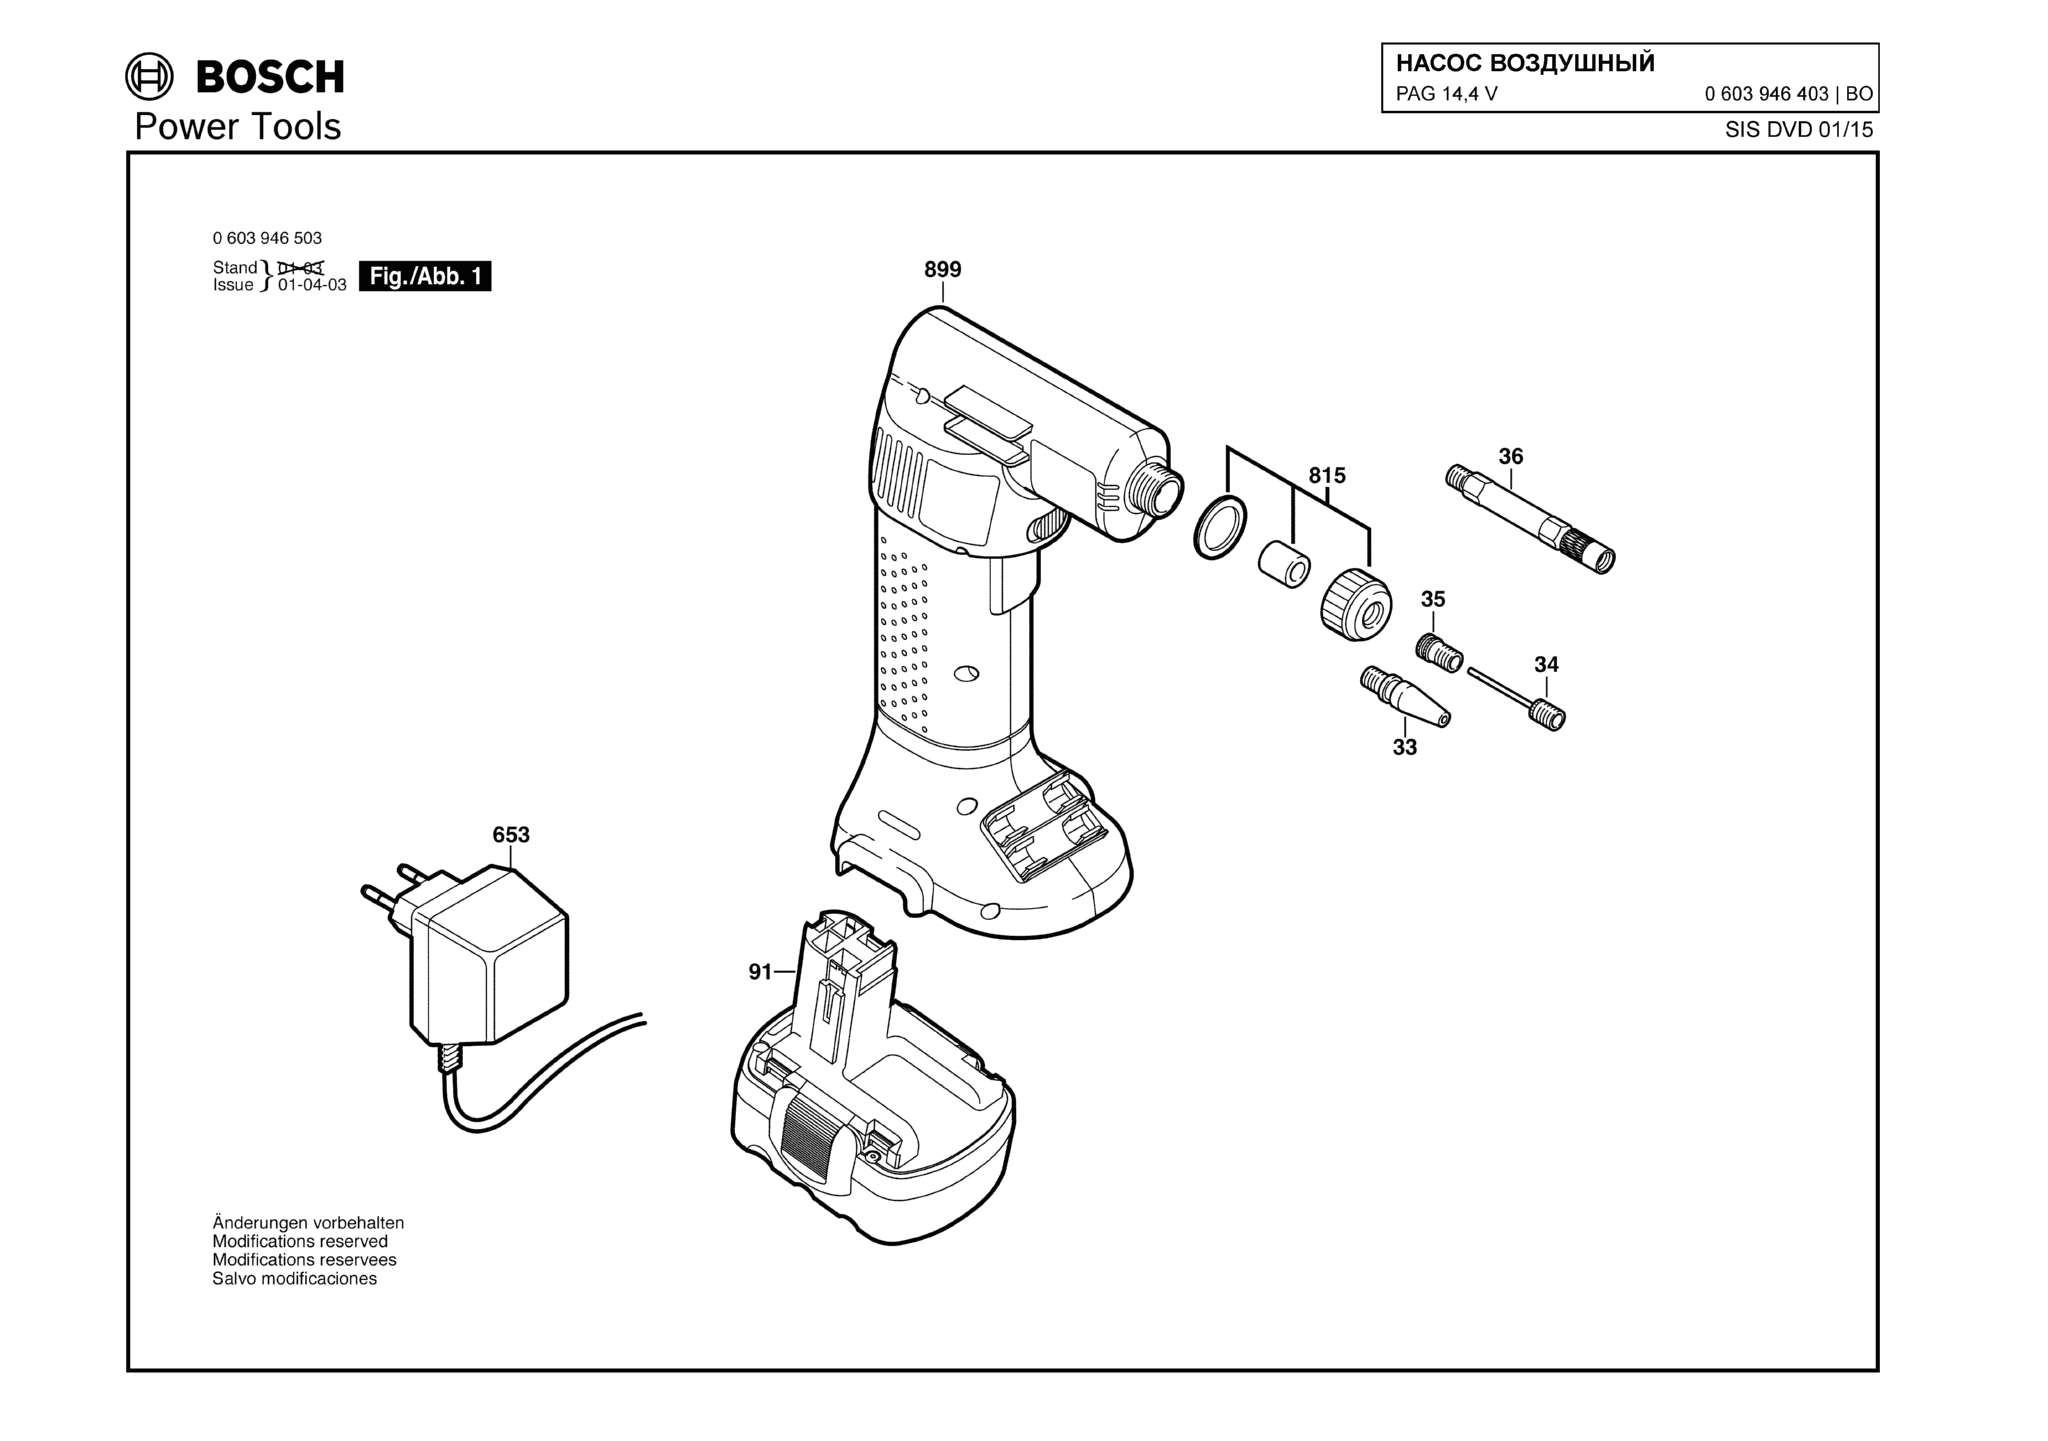 Запчасти, схема и деталировка Bosch PAG 14,4 V (ТИП 0603946403)